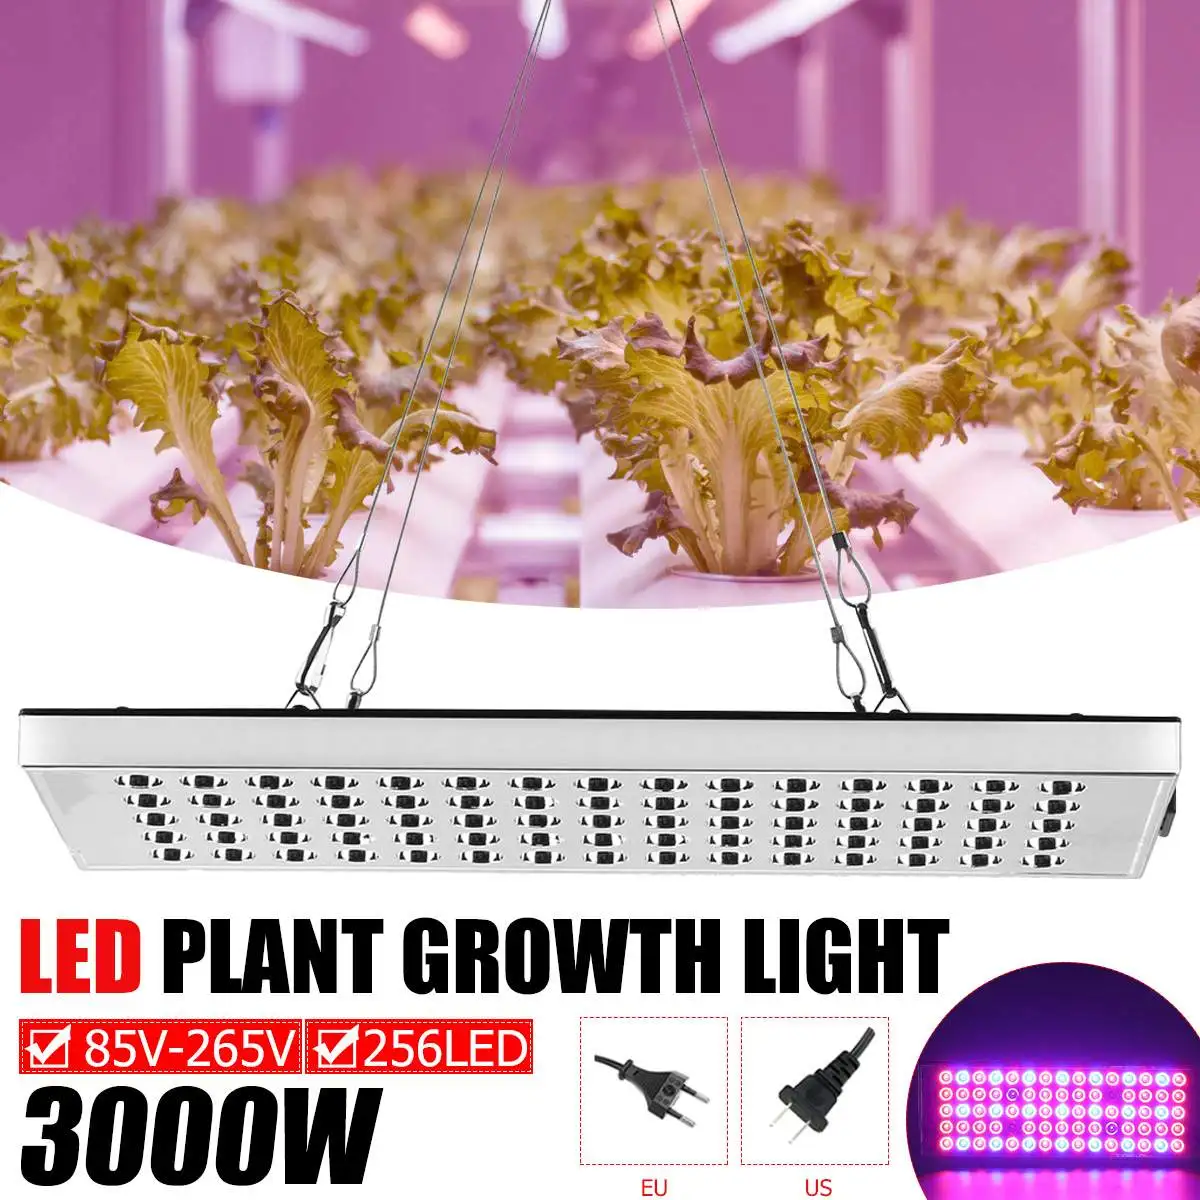 

LED Grow Light 3000W 85-265V LED Full Spectrum Phyto Lamp Greenhouse Hydroponic Plant Growth Lighting Flower Seedlings Grow Lamp